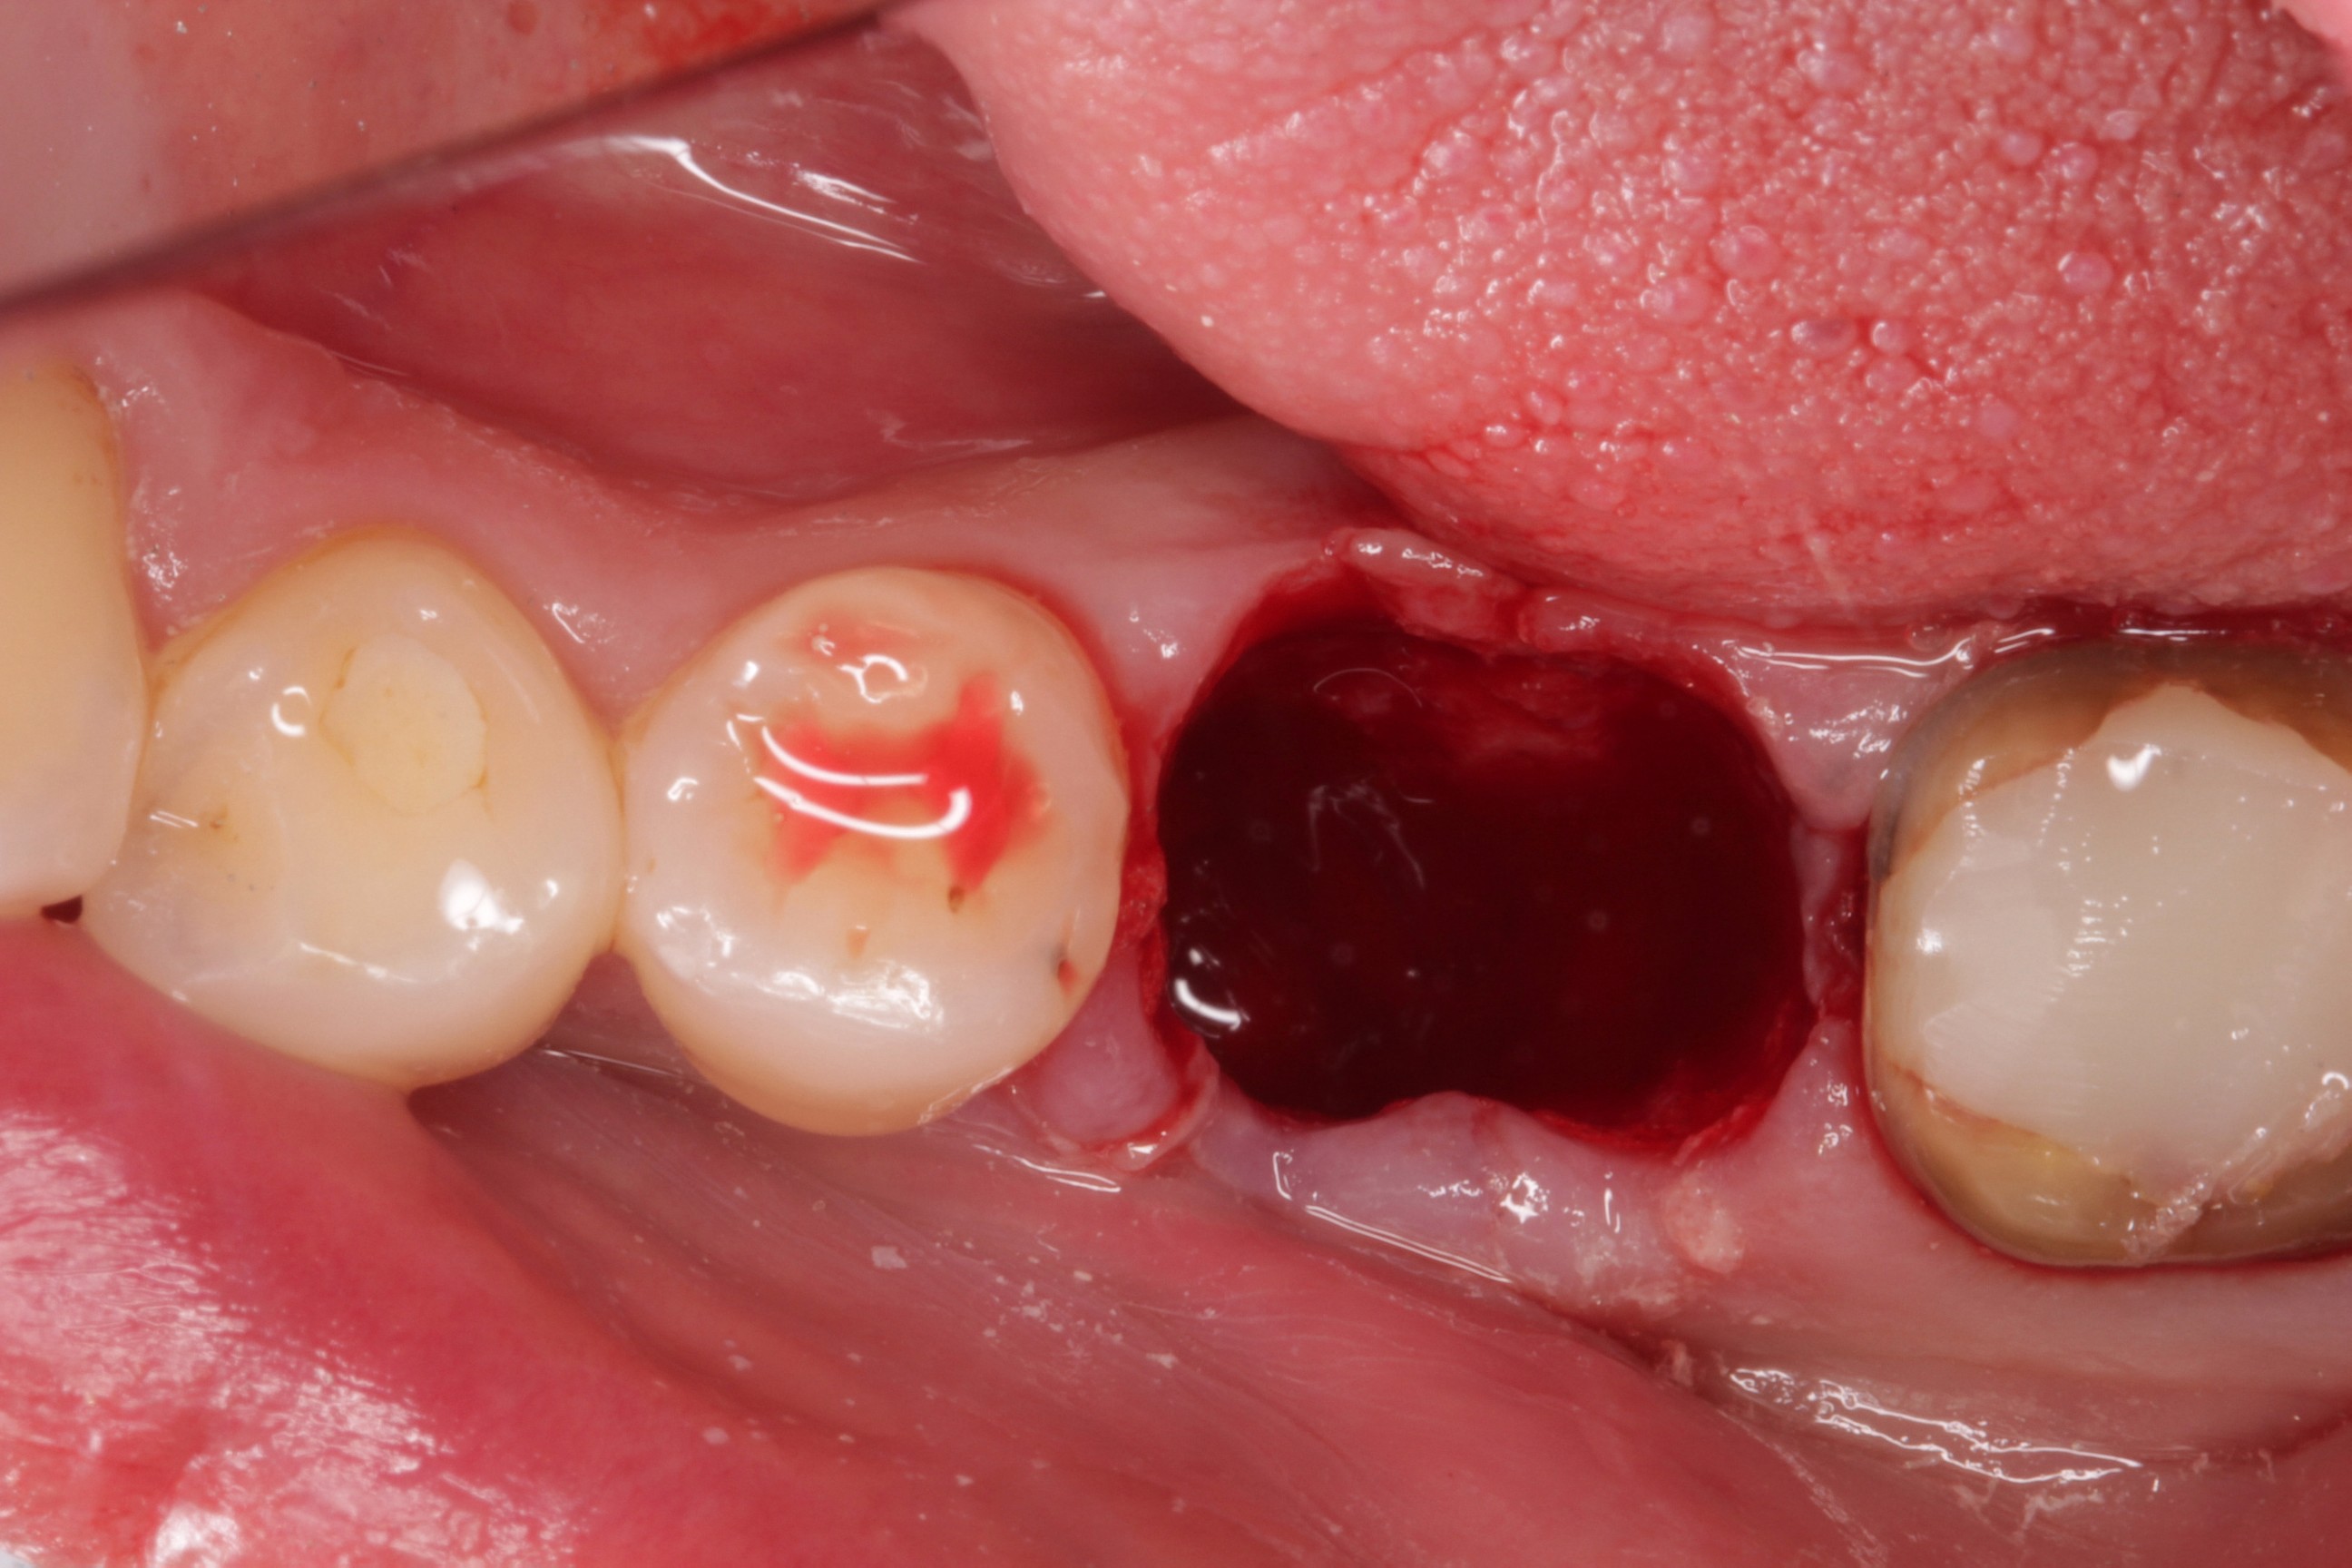 自家歯牙移植の症例 | 市ヶ谷・歯医者